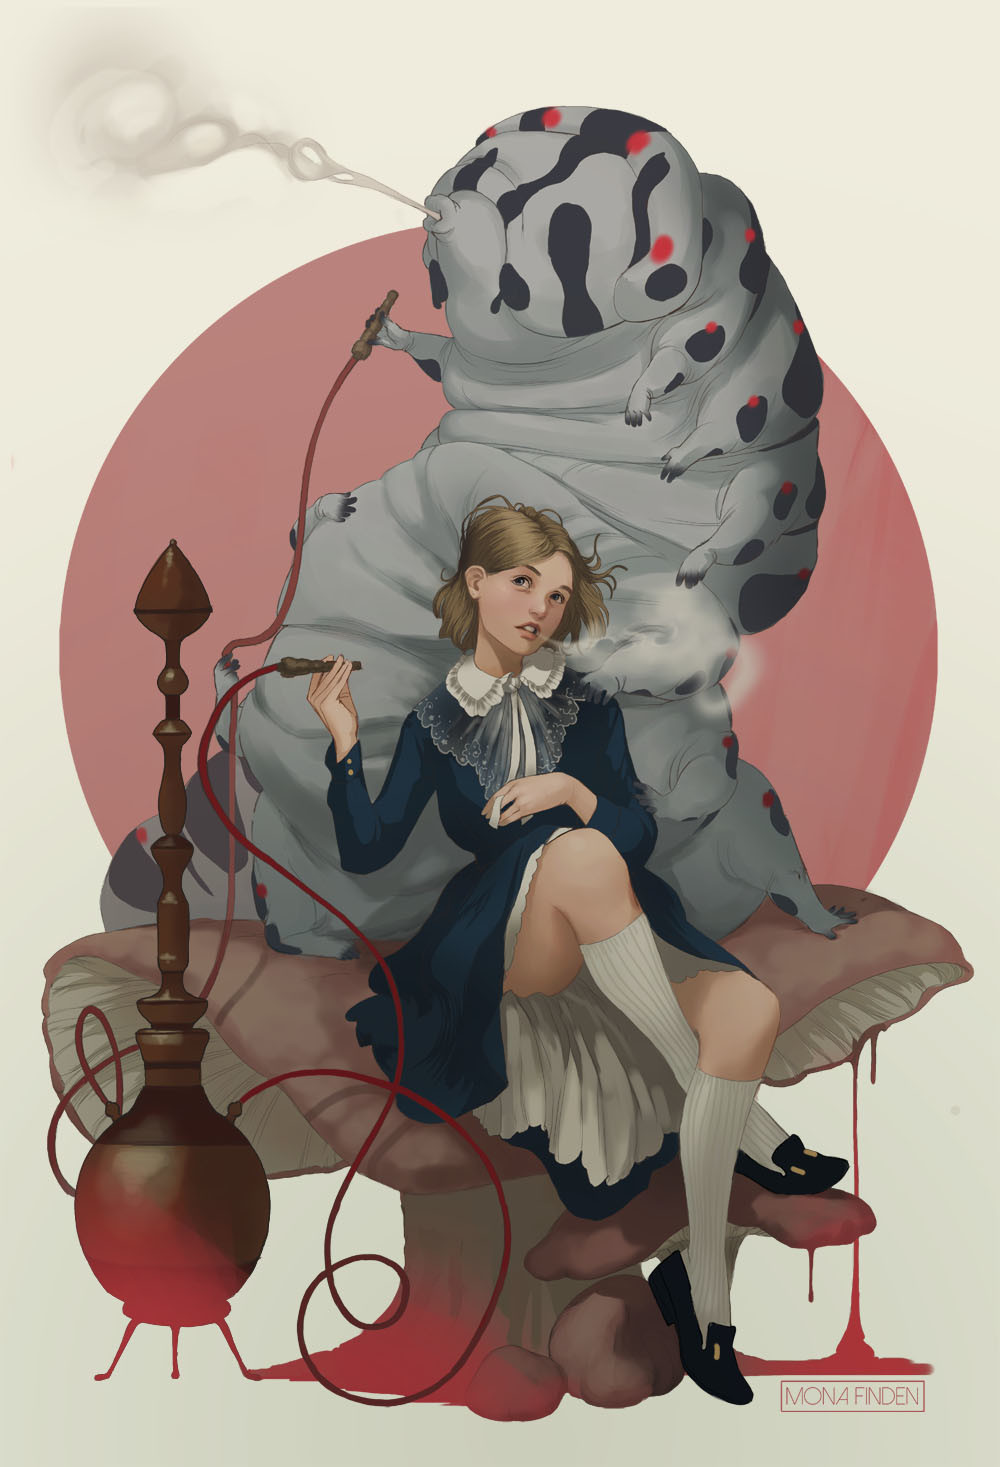 General 1000x1467 Mona Finden illustration women Alice in Wonderland dress cushions Caterpillar (company) blonde smoke